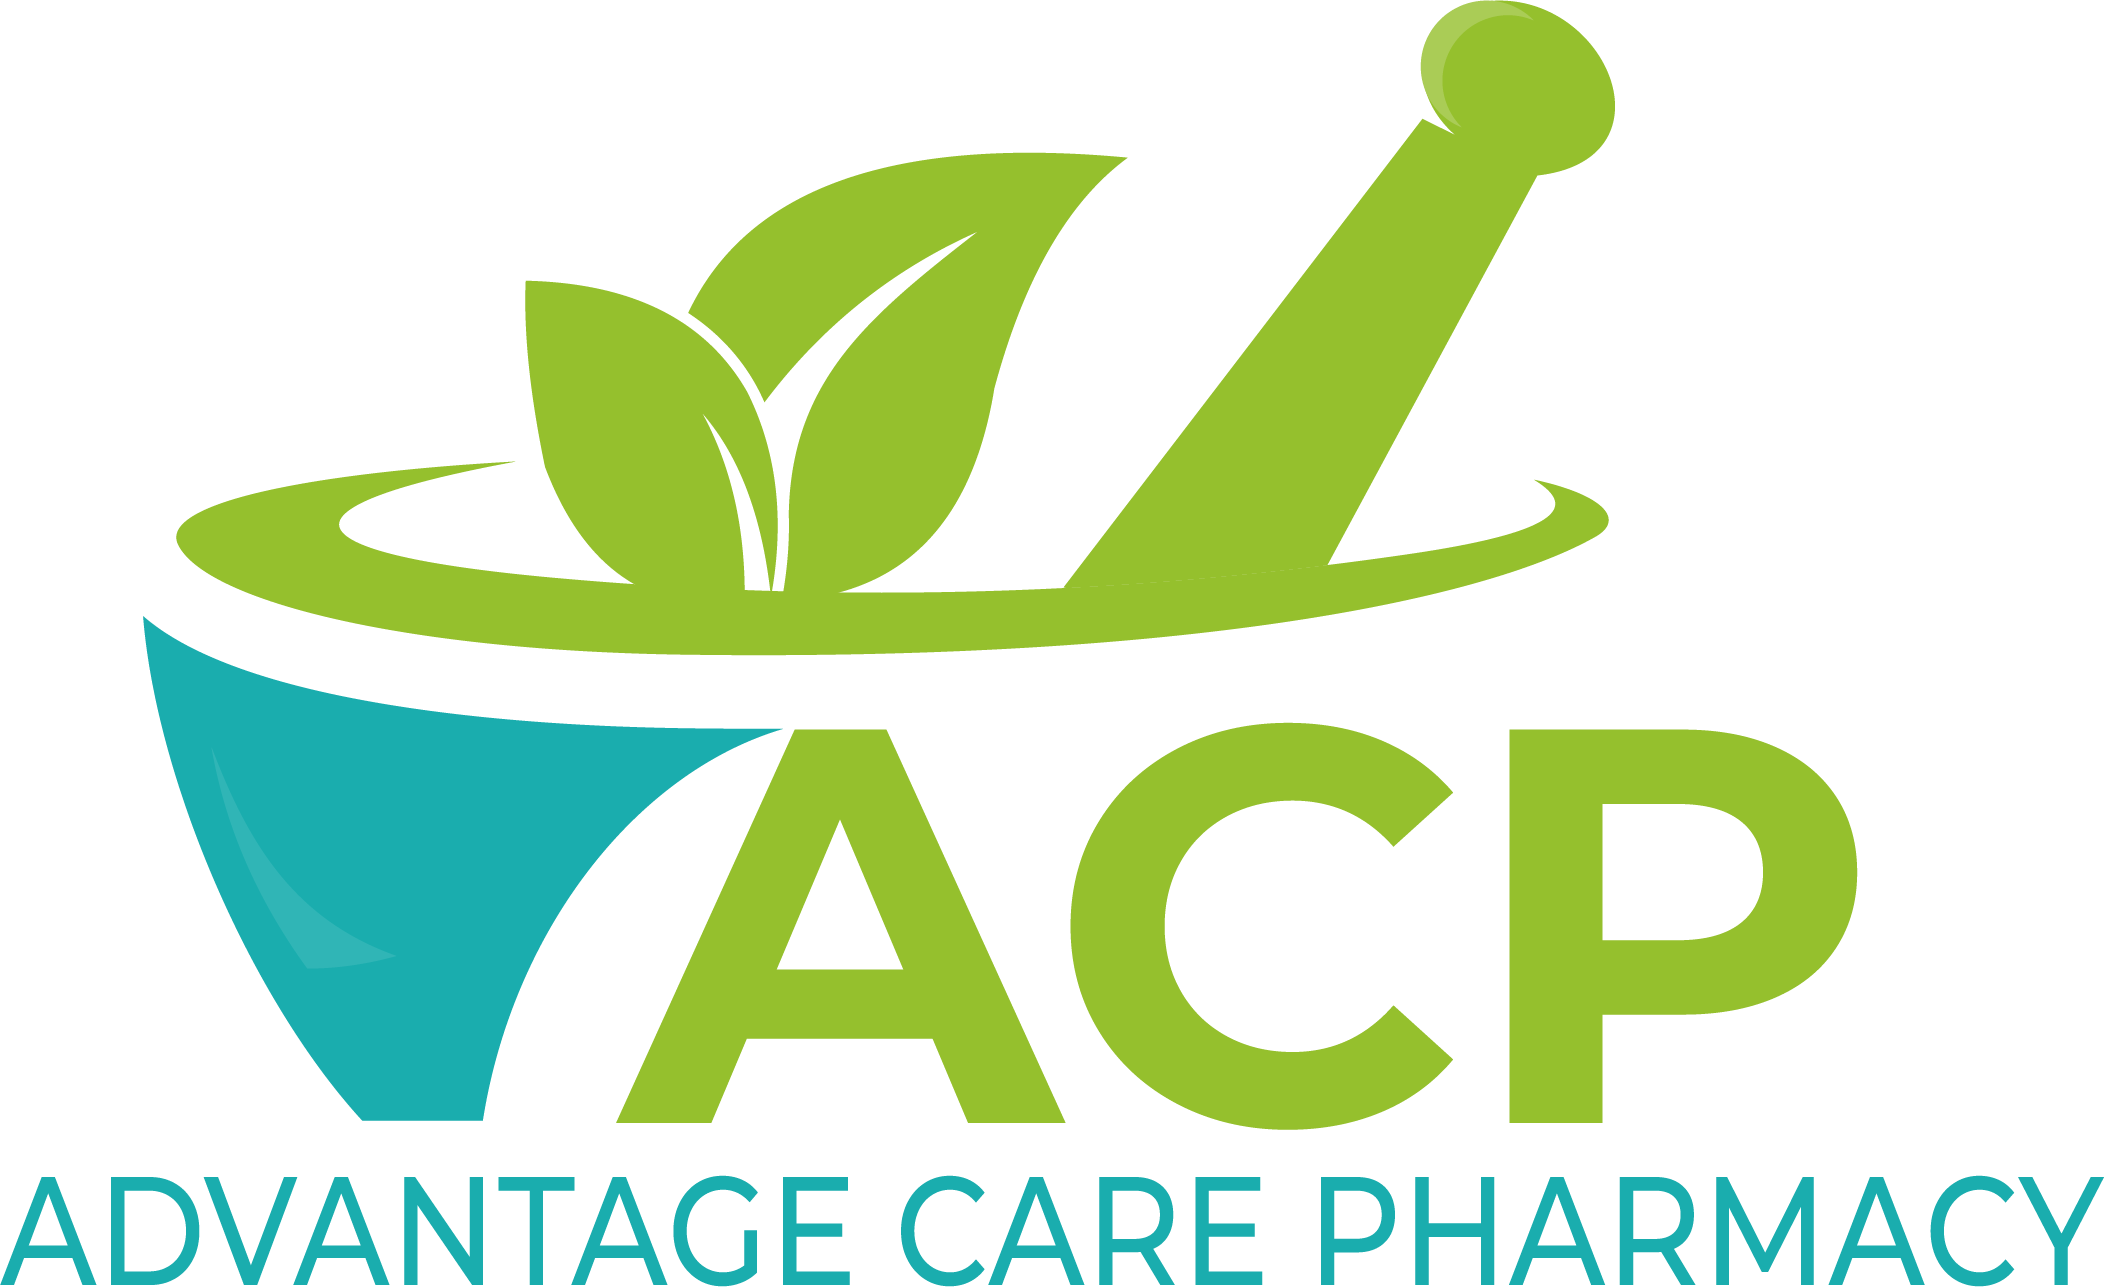 Advantage Care Pharmacy Services